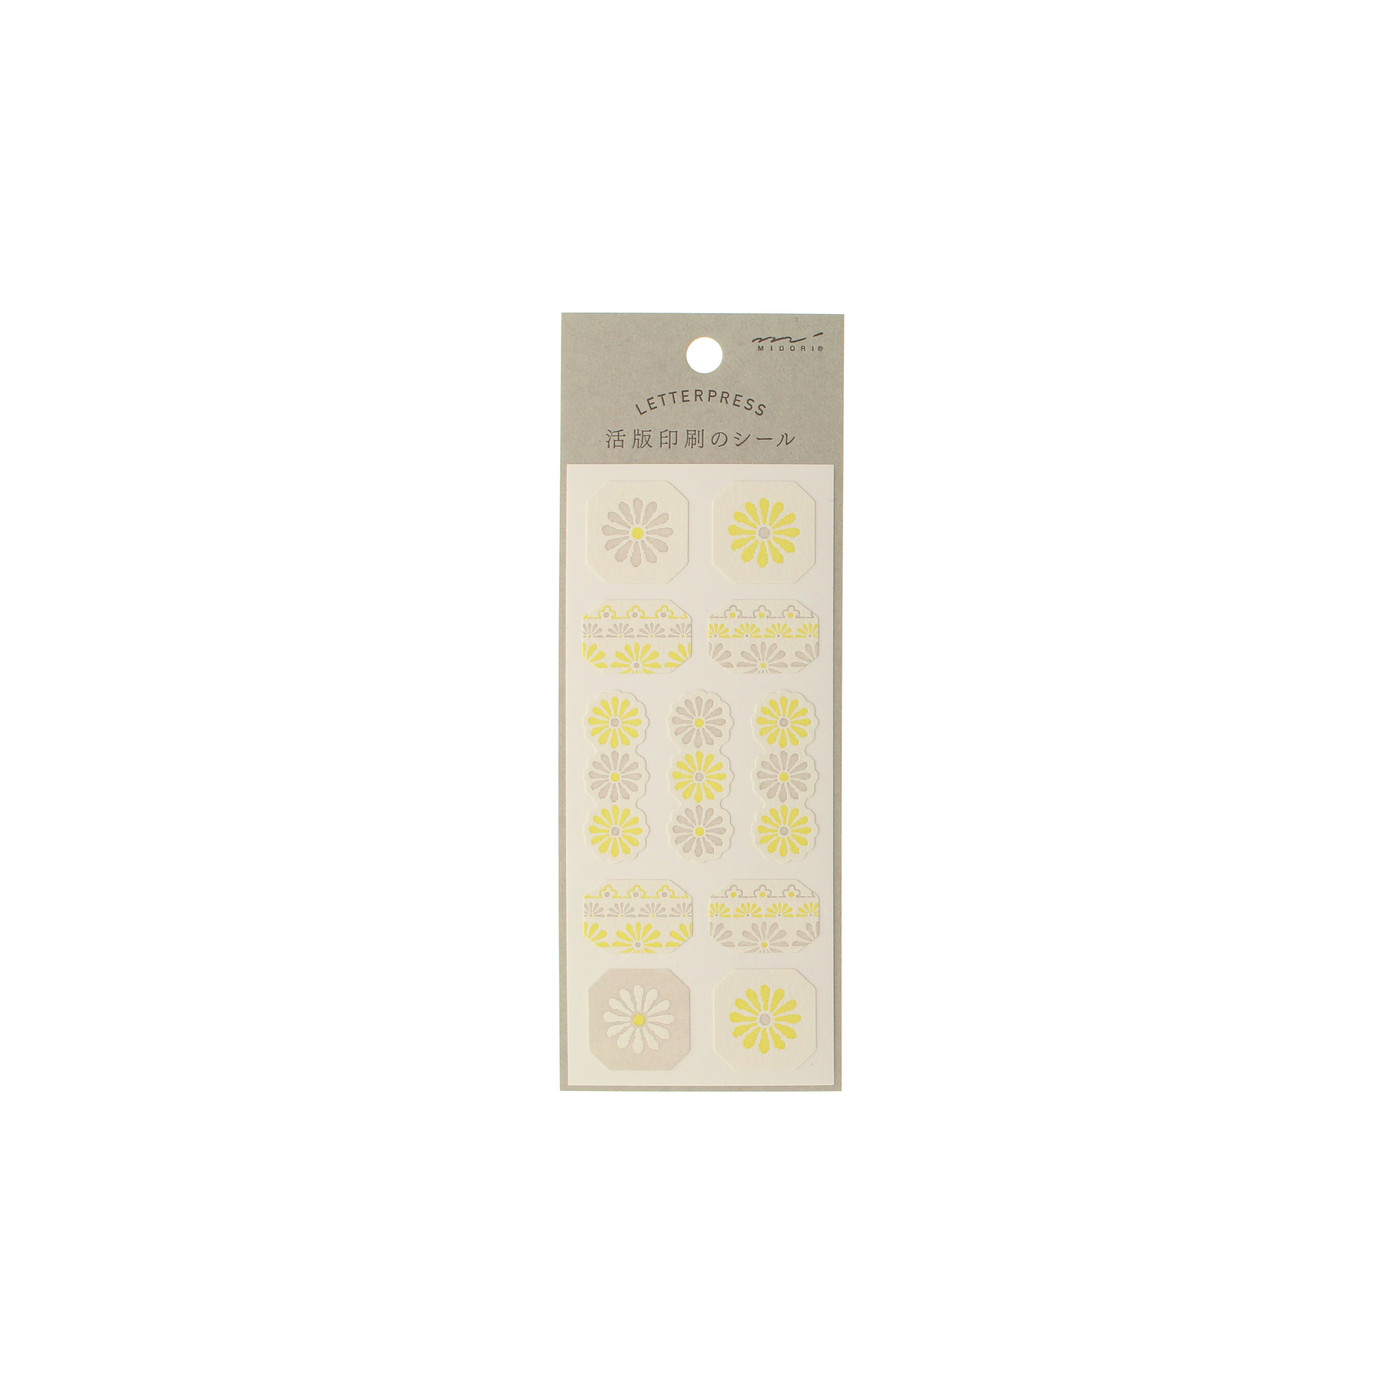 Midori letterpress stickers - daisy